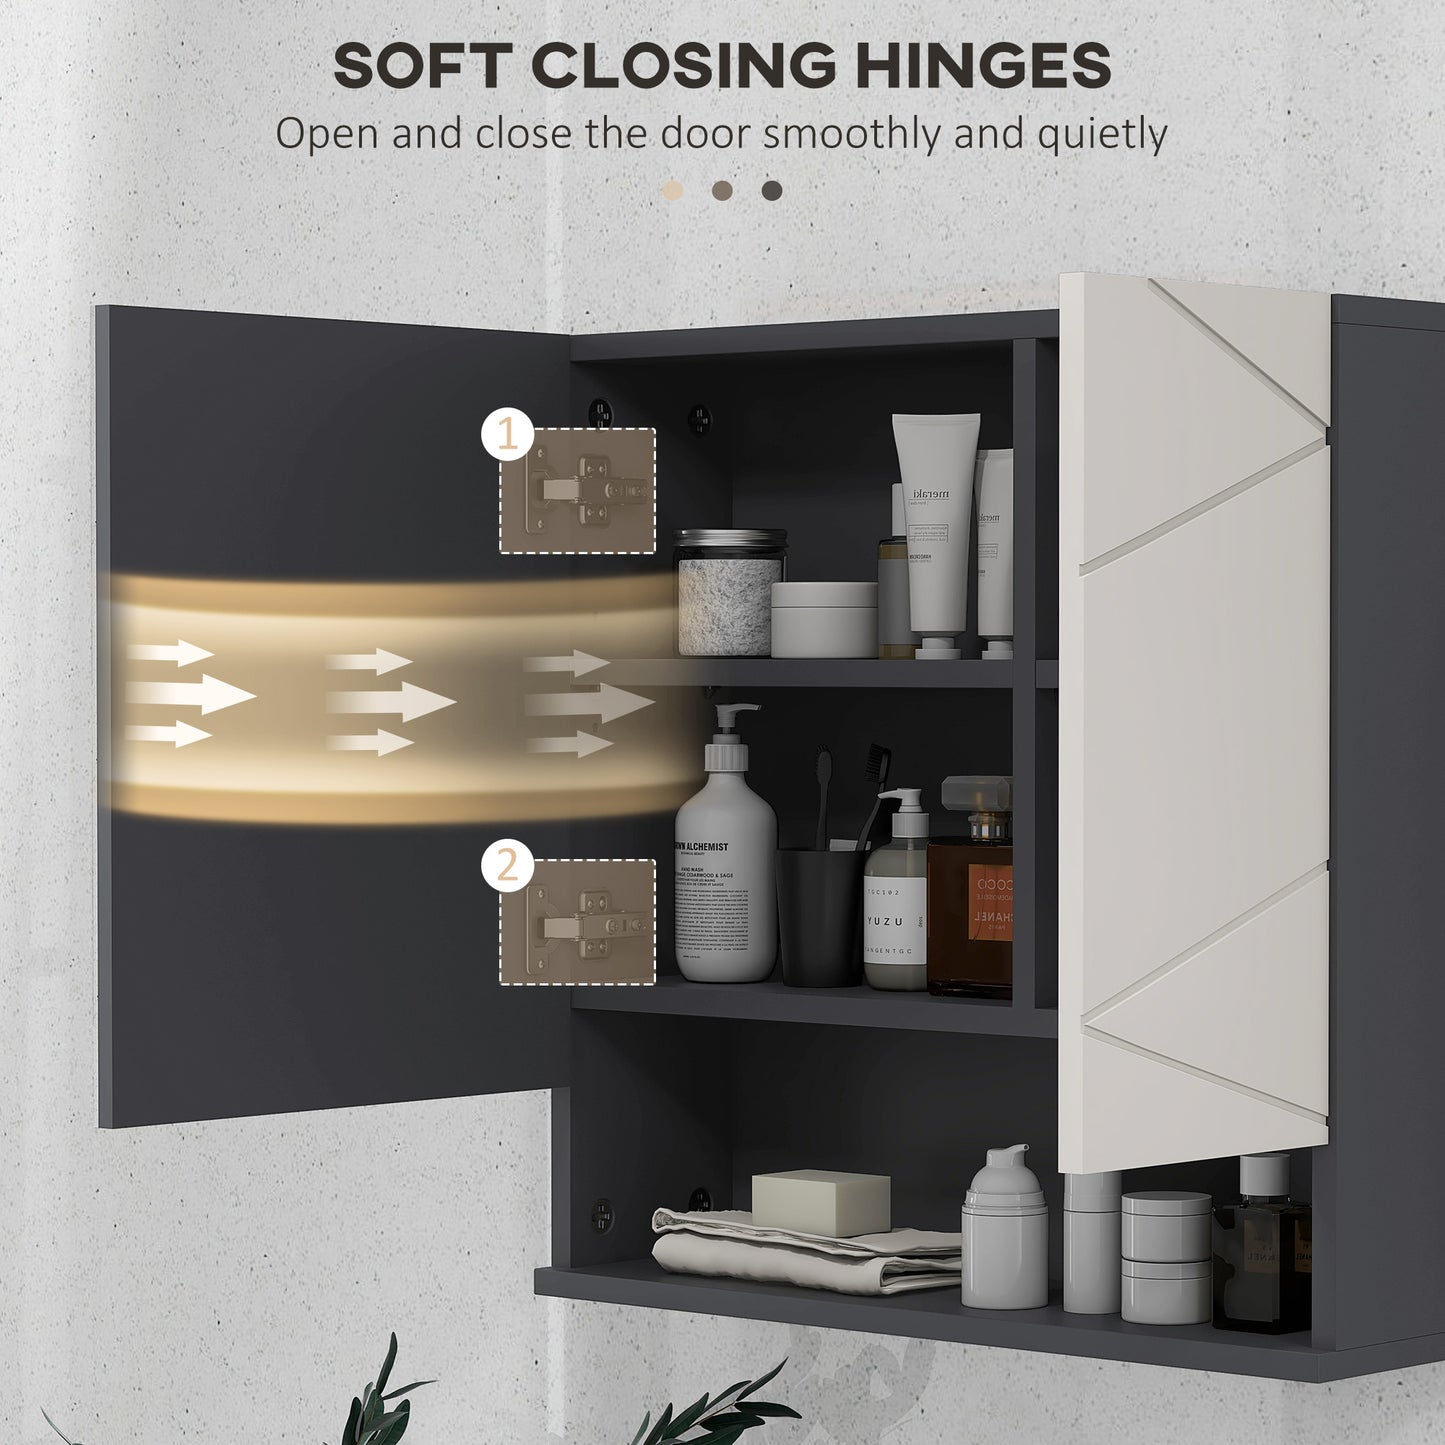 kleankin Bathroom Mirror Cabinet, Wall Mounted Bathroom Storage Cupboard with Adjustable Shelves, 55W x 17D x 55Hcm, Light Grey